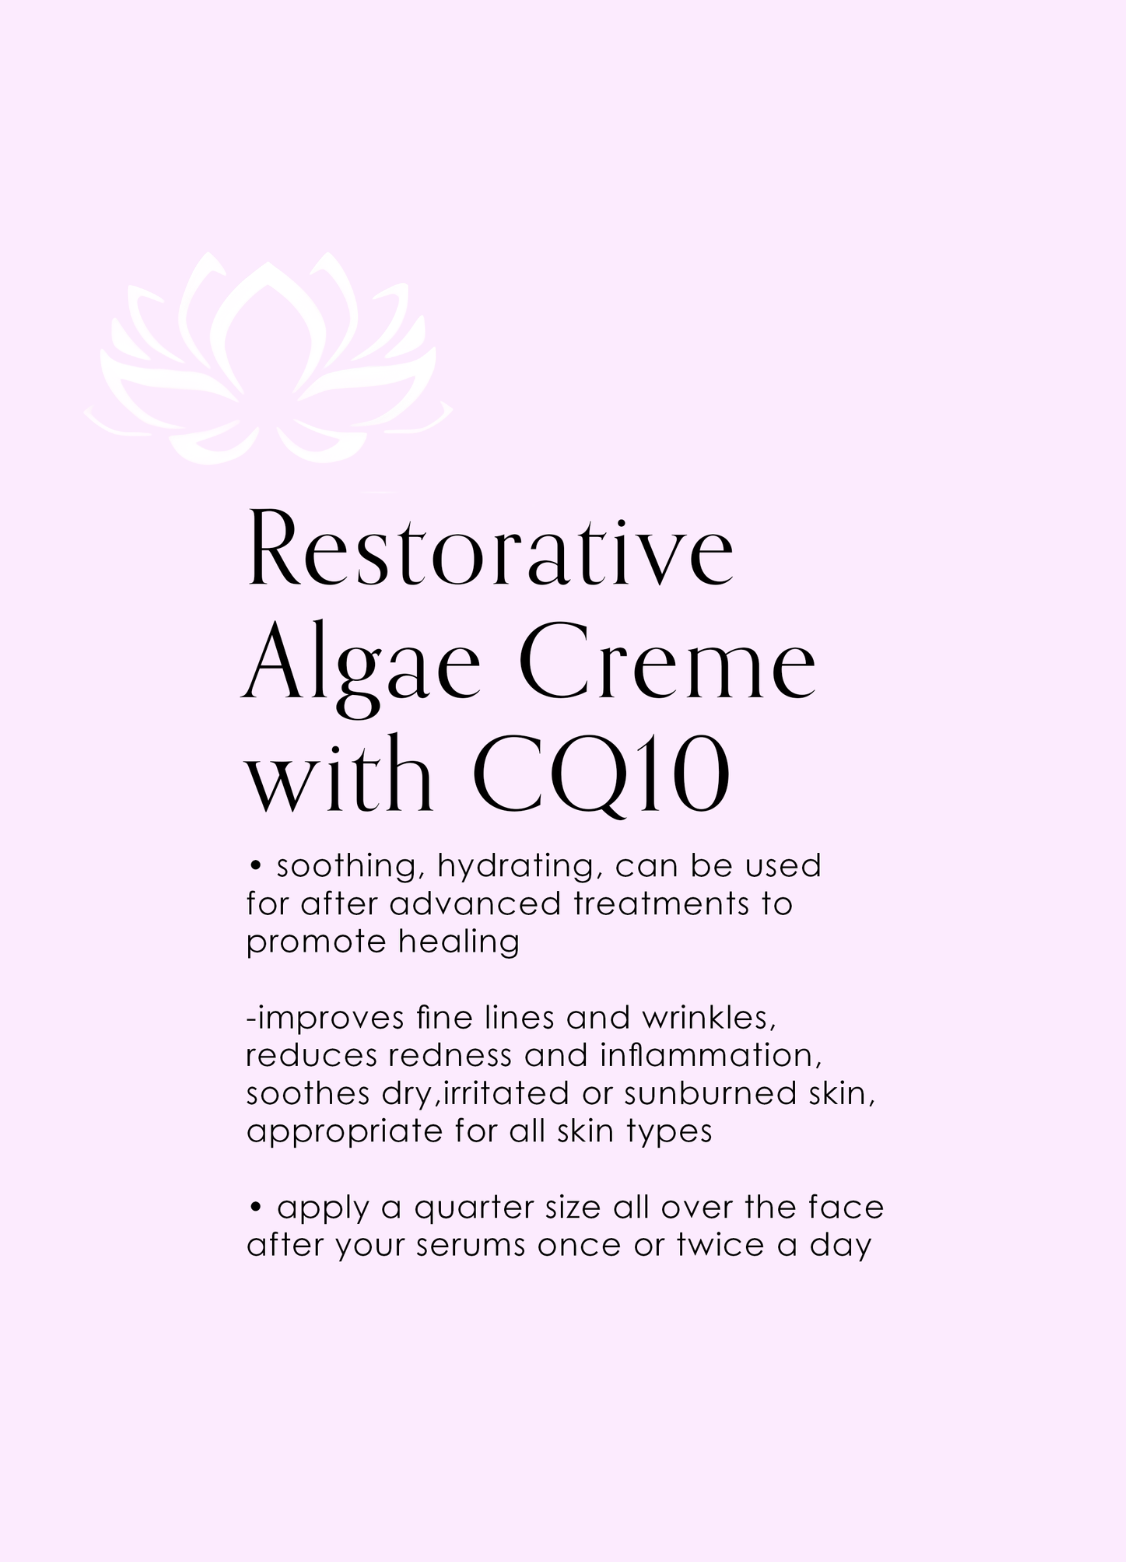 Restorative Algea Creme with CQ10